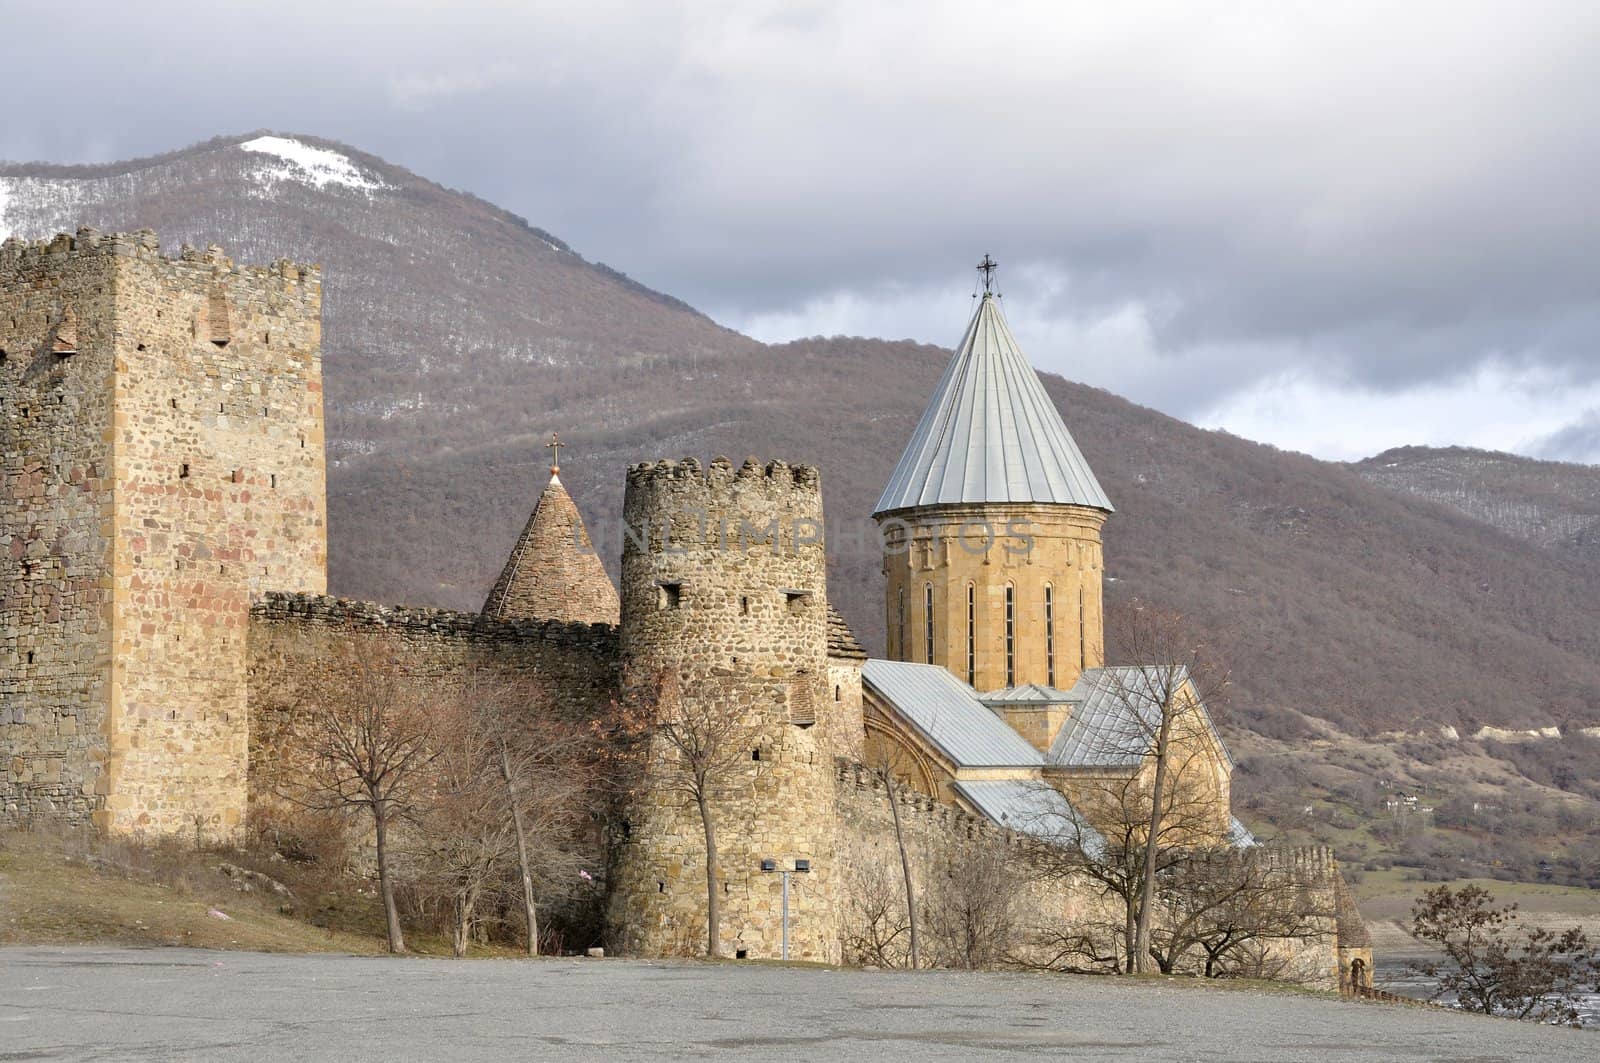 Ananuri fortress on the Georgian Military Highway